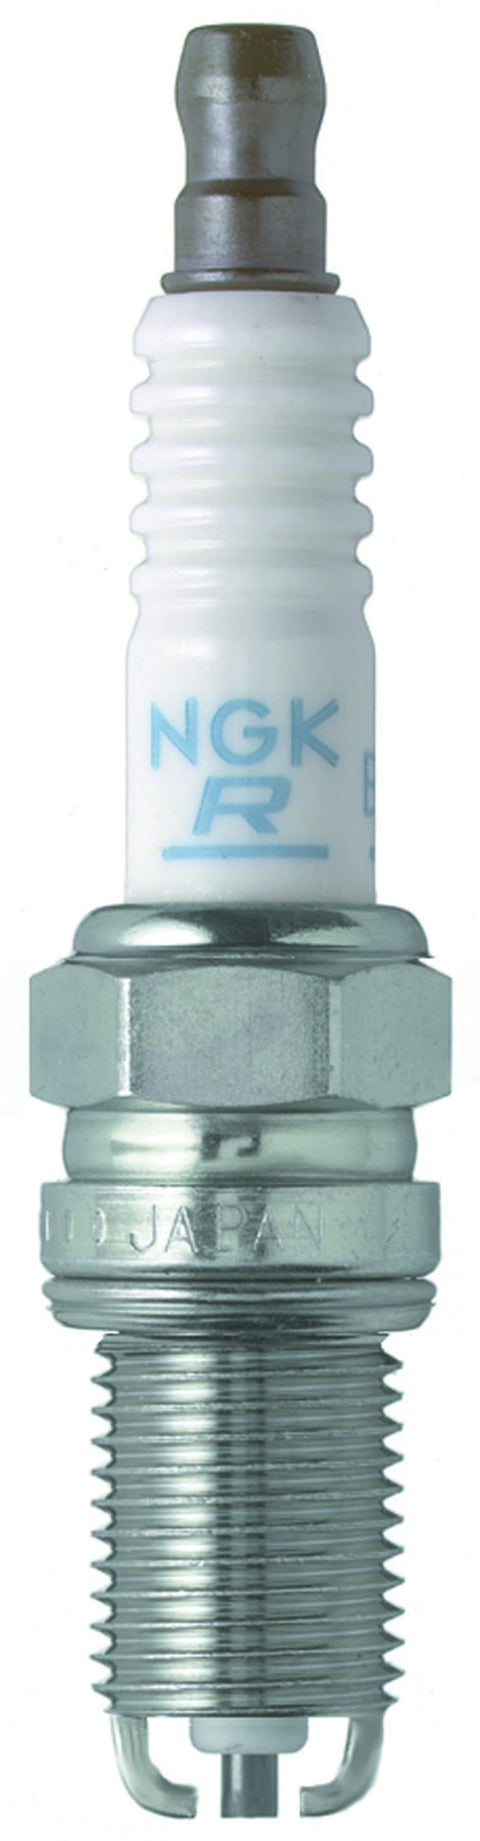 NGK Single Platinum Heat Range 8 Spark Plug | 2006-2008 BMW Z3 / Z4 (7415-1)